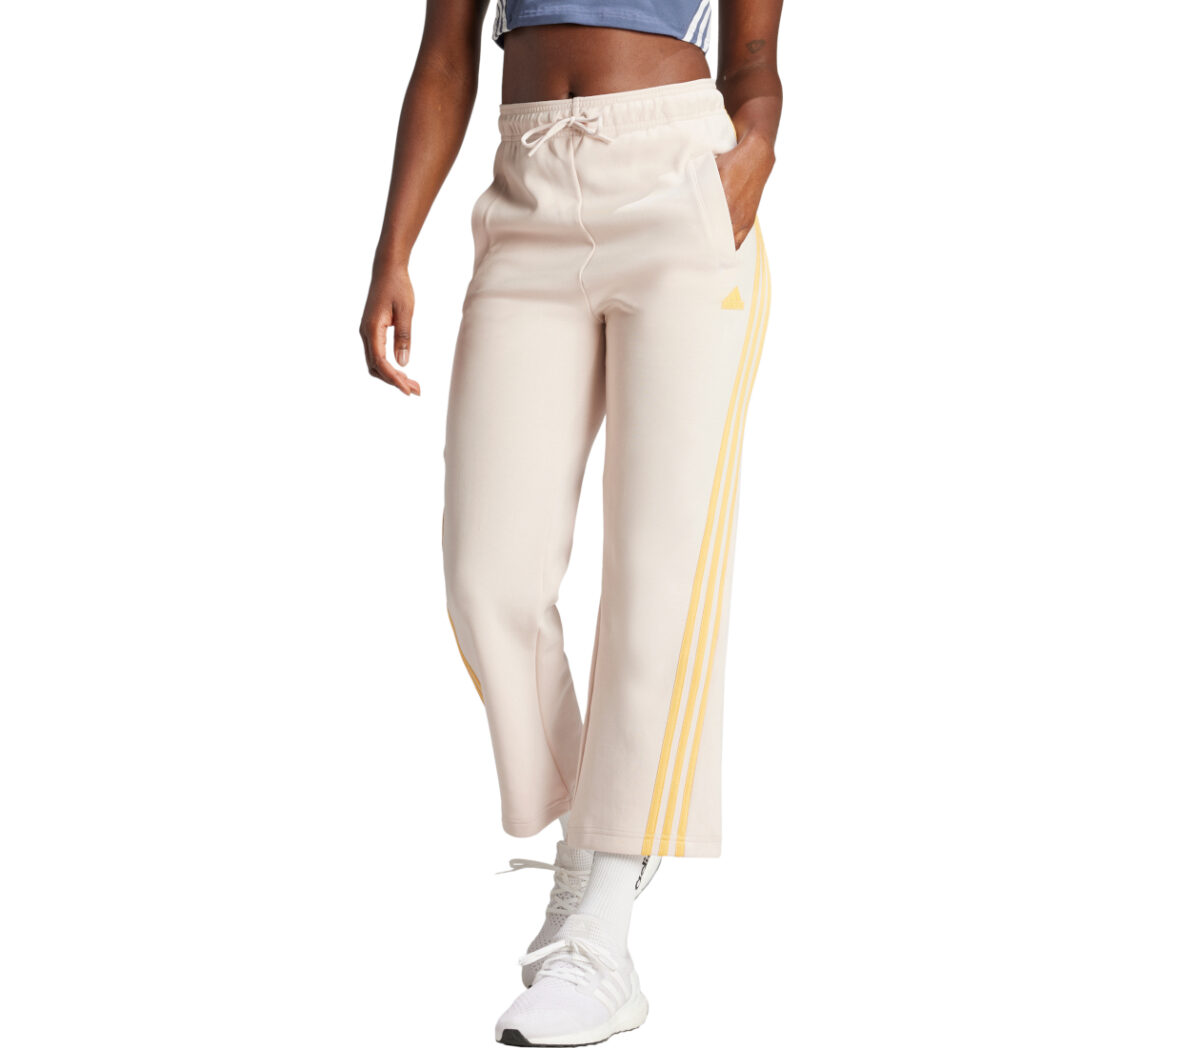 Pantalone adidas FI 3S OH PT donna beige